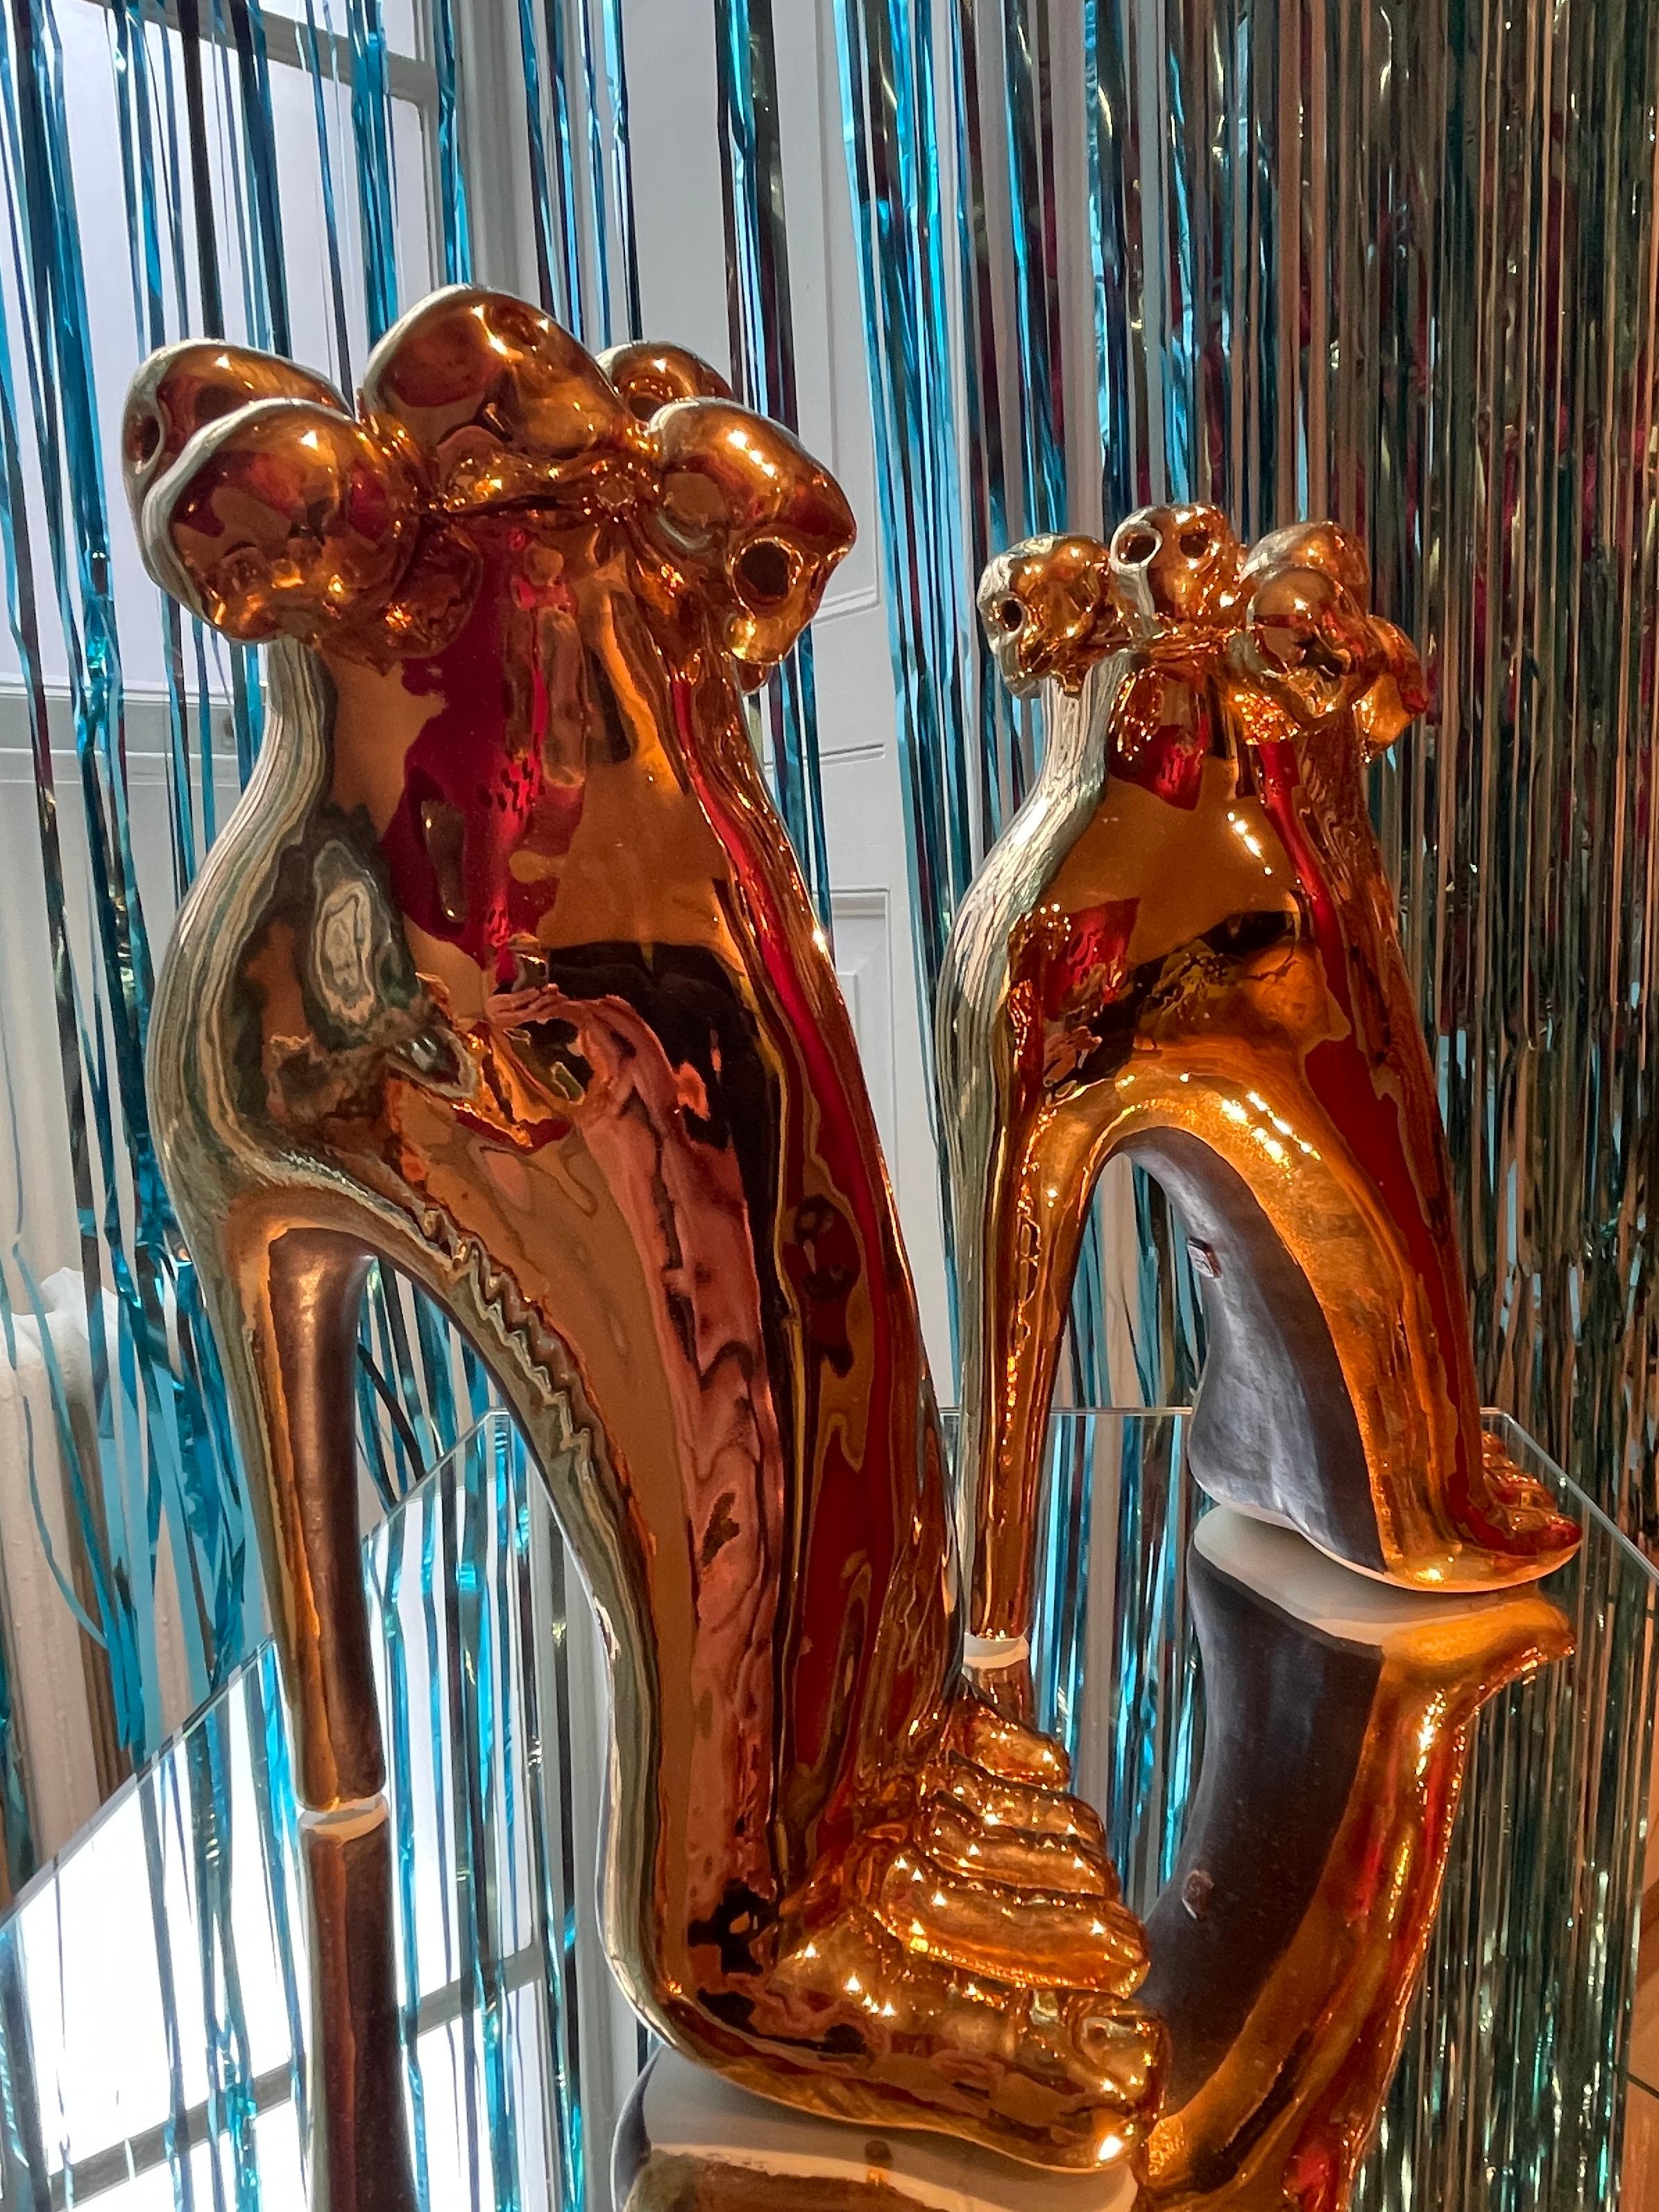 Modern Sculptural Vases by Elica Studio Porcelain 24K Gold Handmade Italy Contemporary